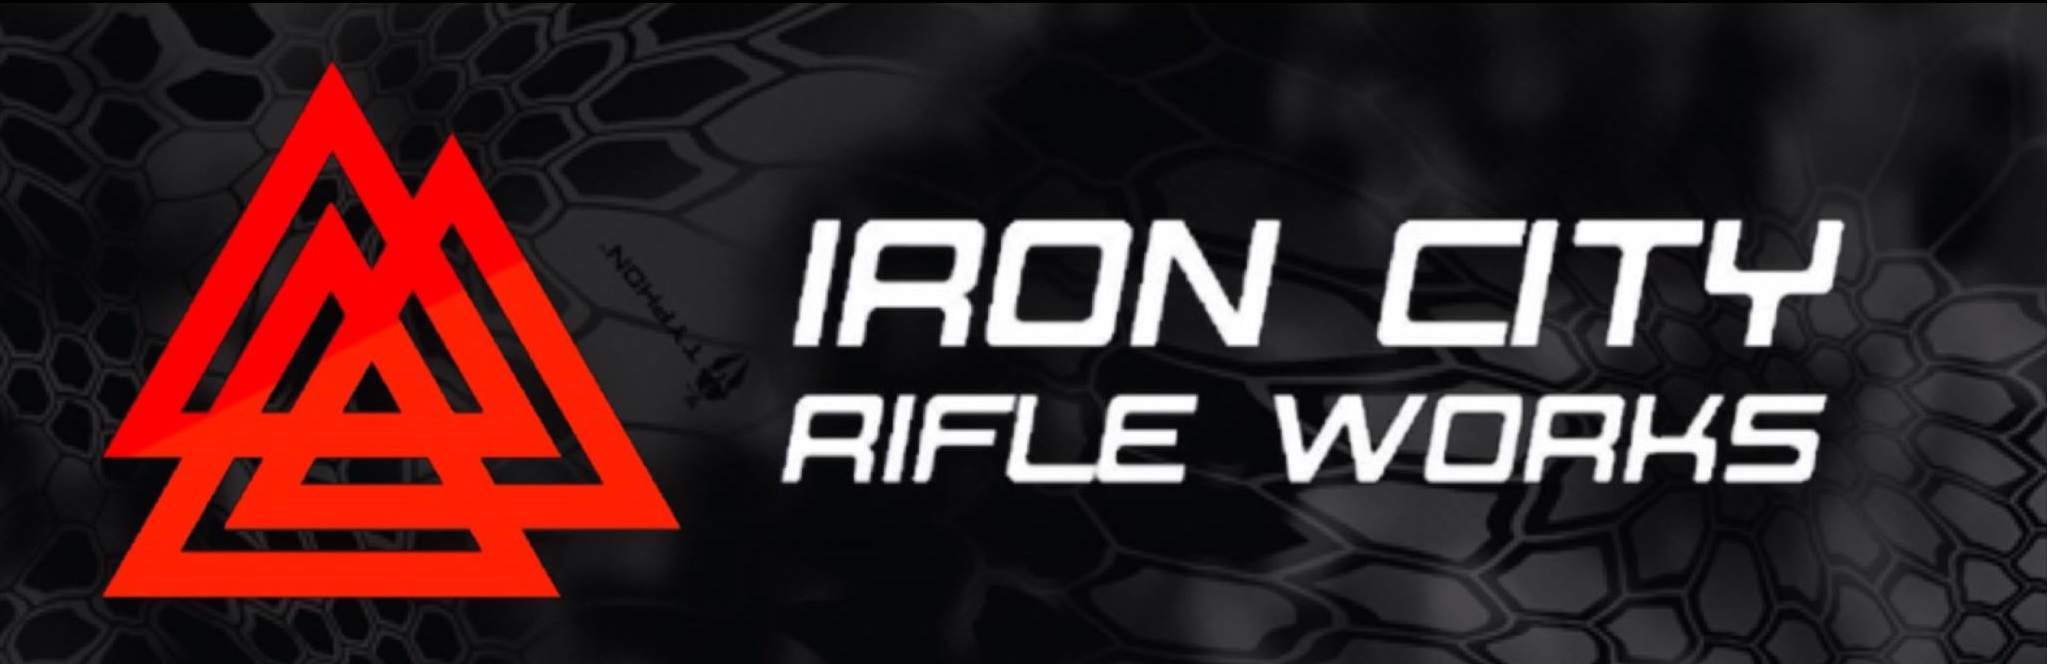 Iron City Rifle Works